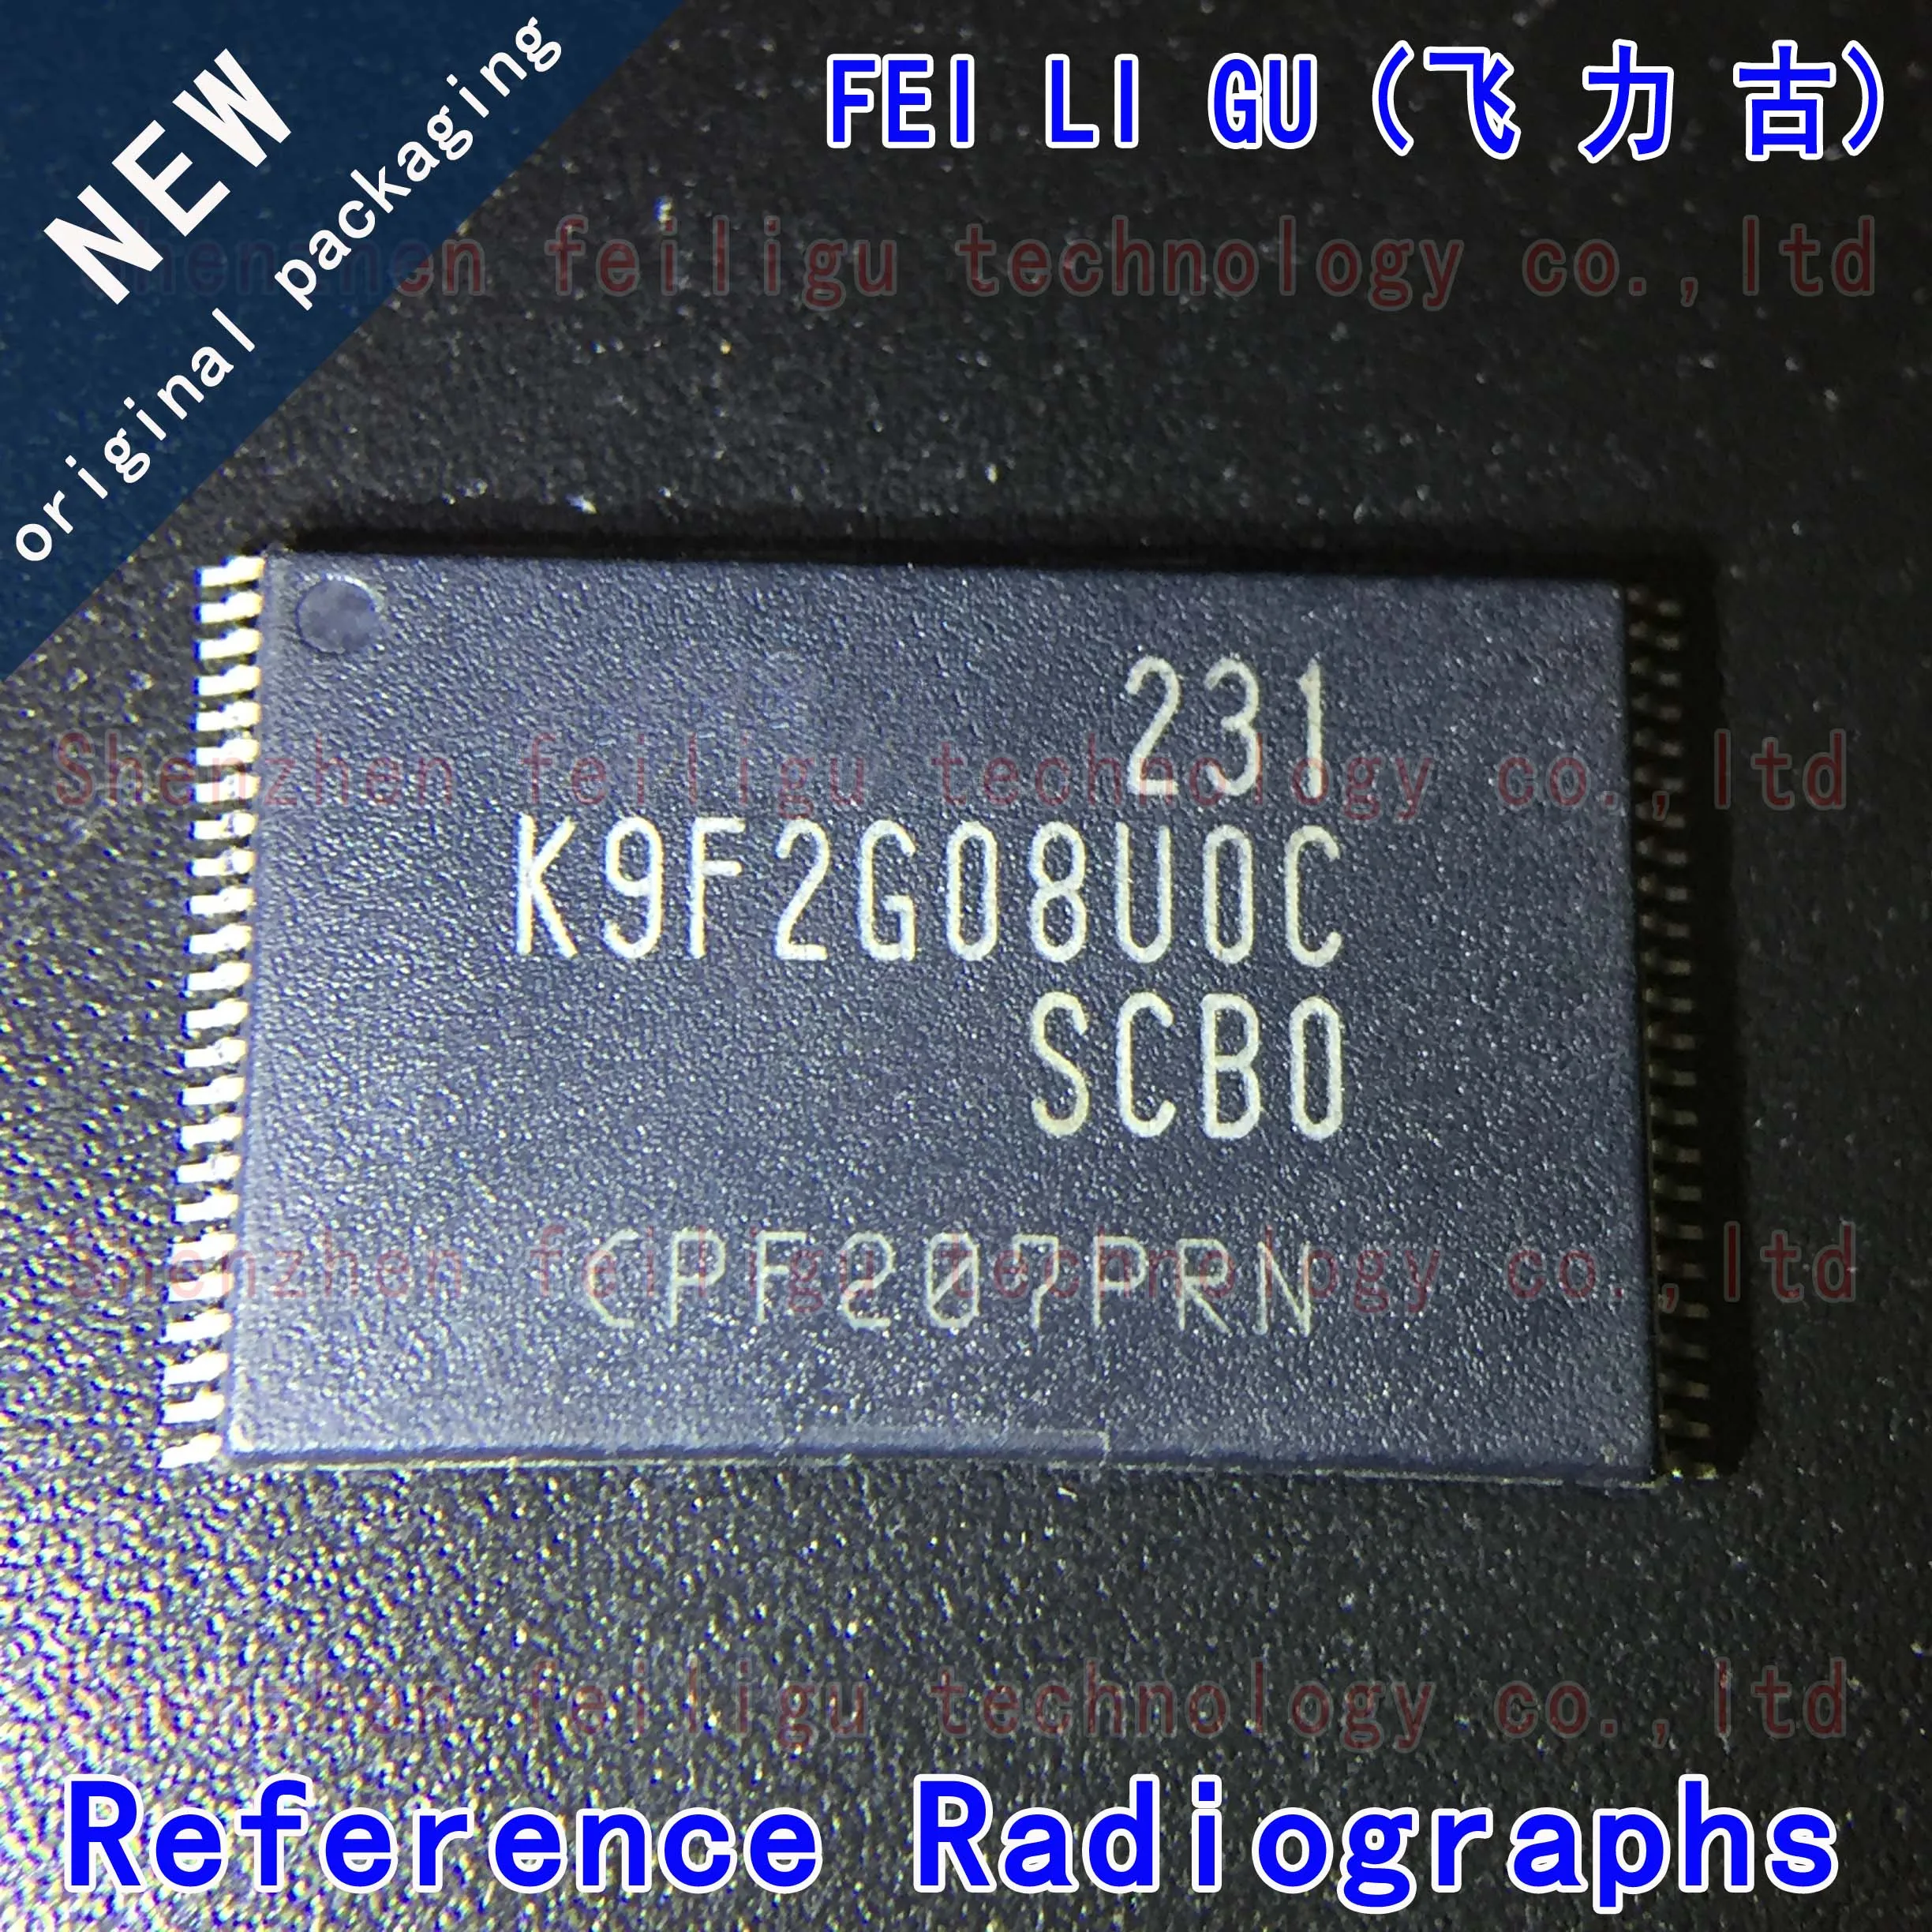 1PCS 100% New original K9F2G08U0C-SCB0 K9F2G08U0C package:TSOP48 memory flash chip